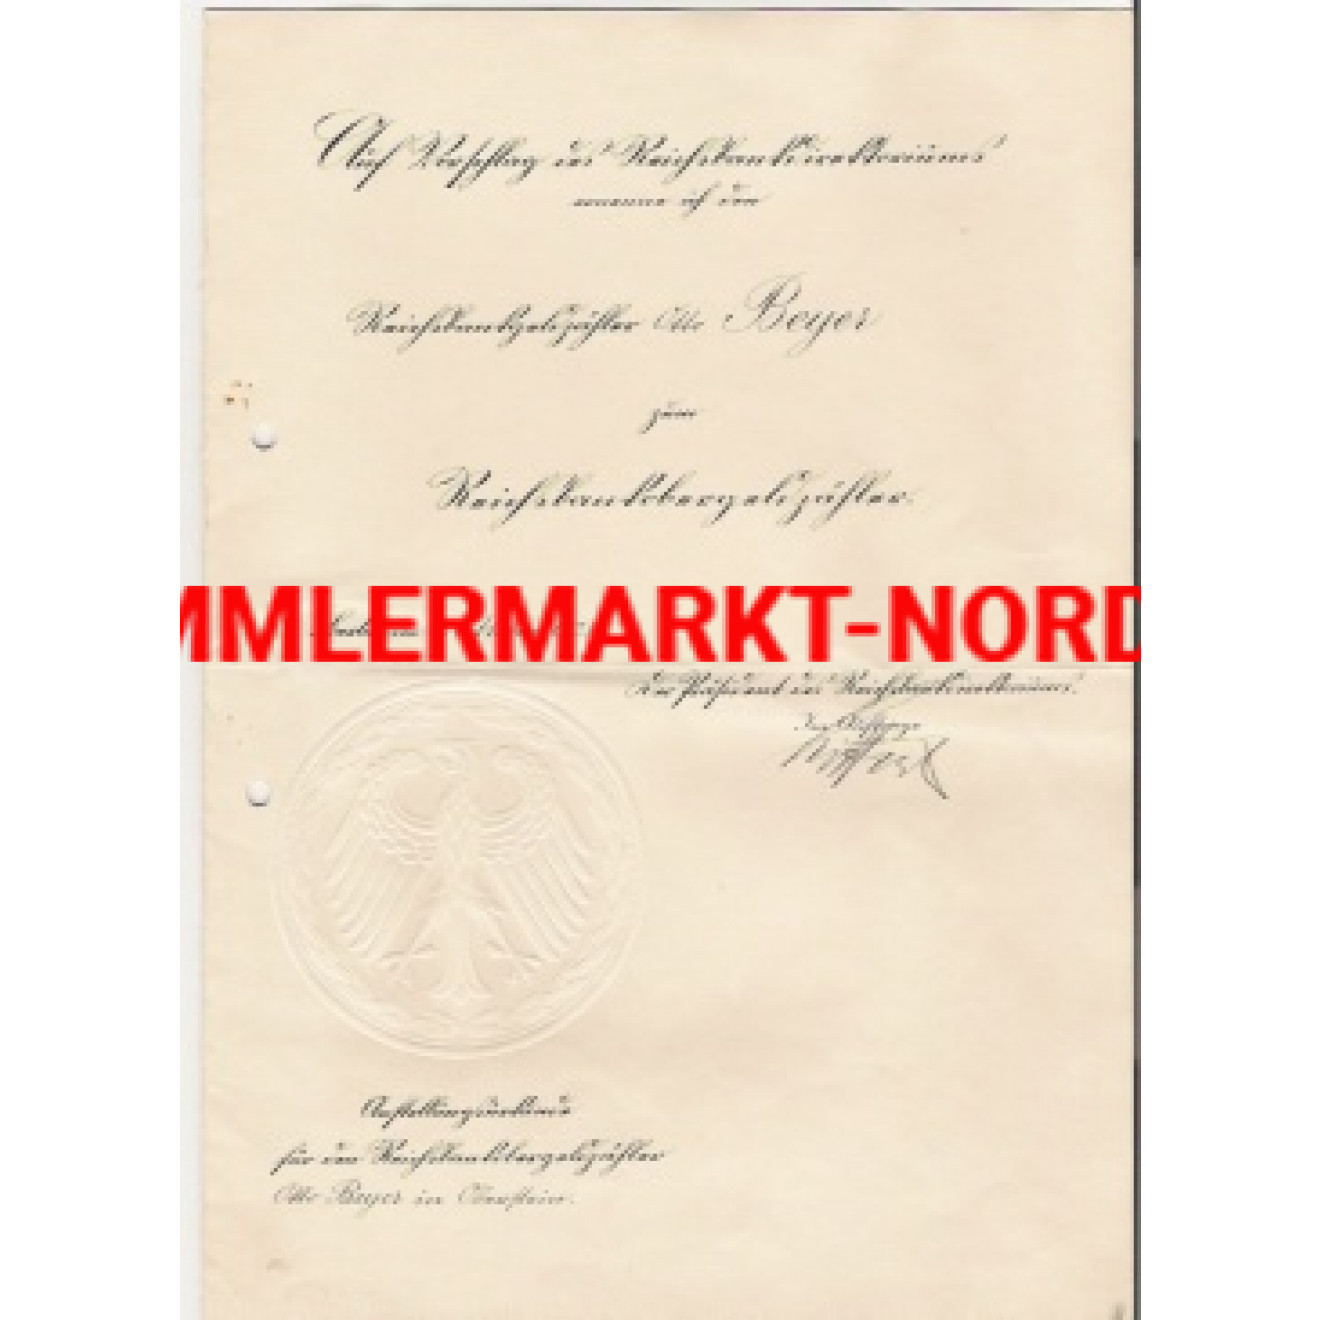 Promotion document for a Reichsbankgeldzöllner to a Reichsbankge